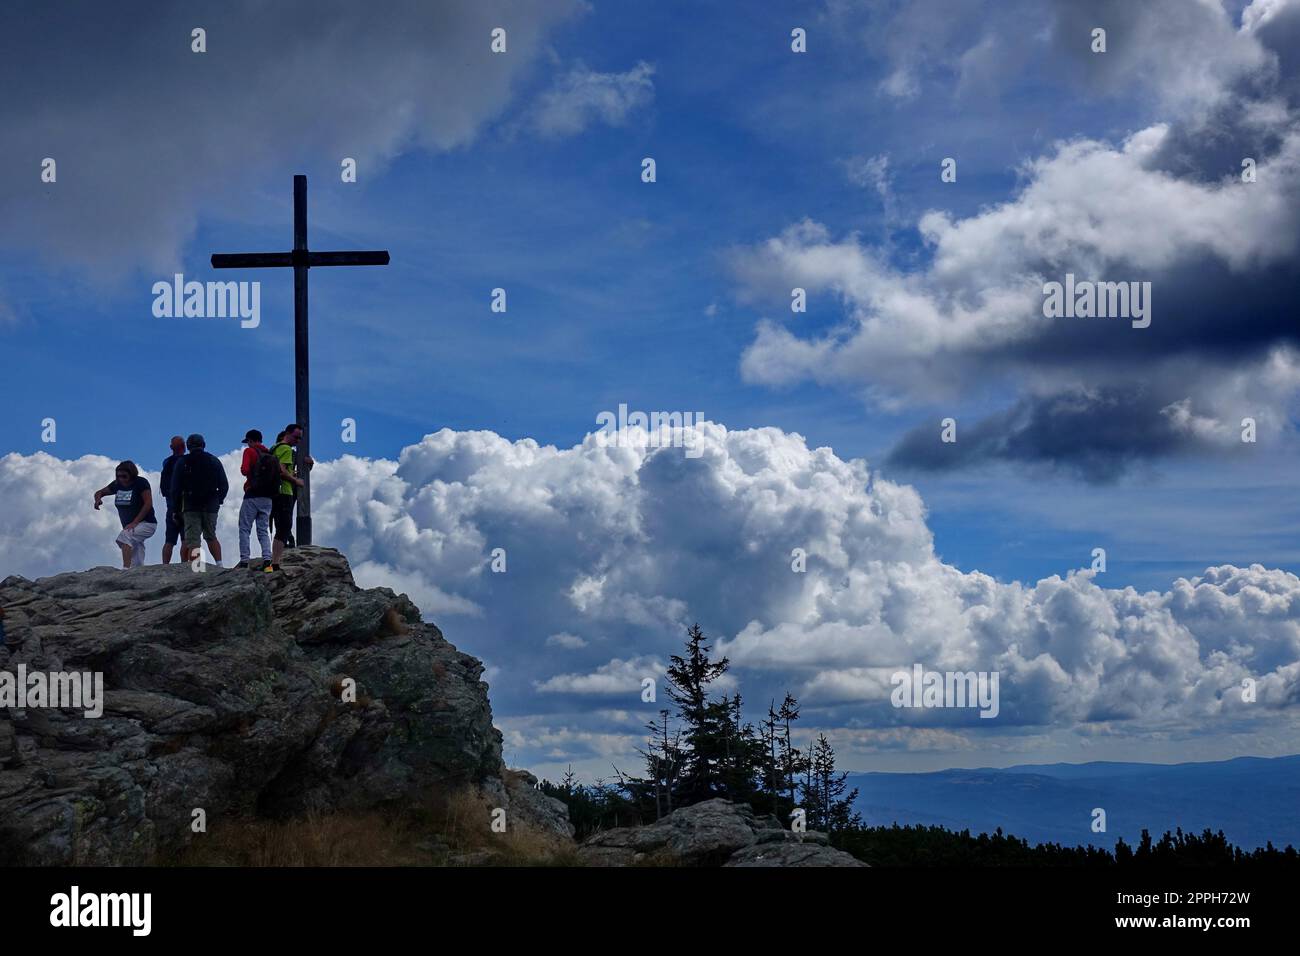 Europa, Germany, Bavaria, Lower Bavaria, Bavarian forest, Landkreis Regen, groÃŸer Arber, summit cross, nature reserve, hiking group, cumulus clouds Stock Photo